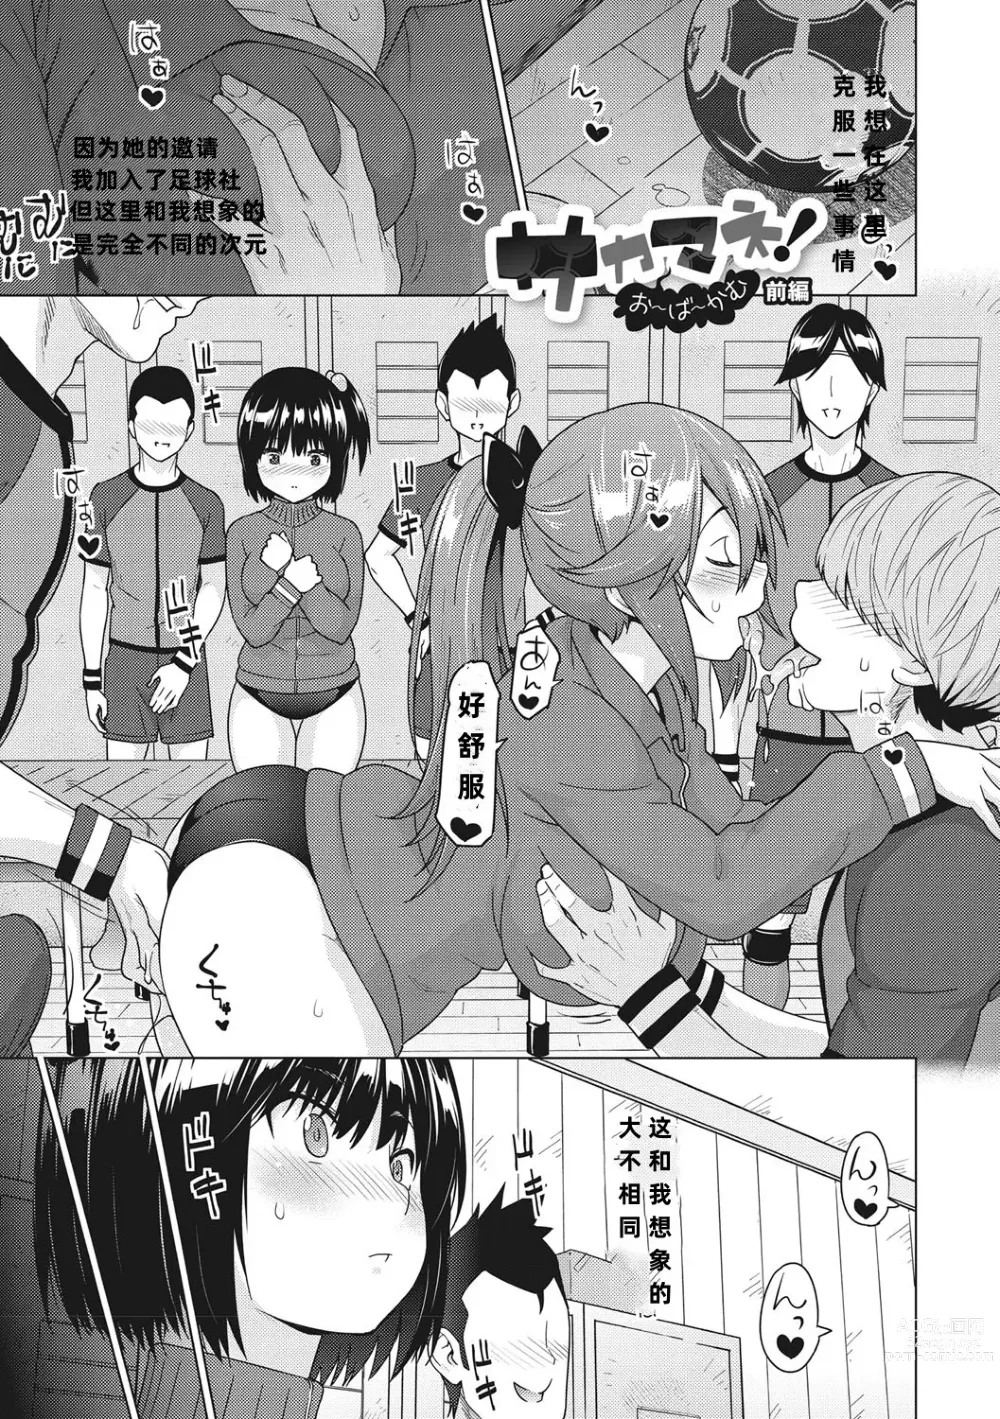 Page 2 of manga SocceMana Overcome